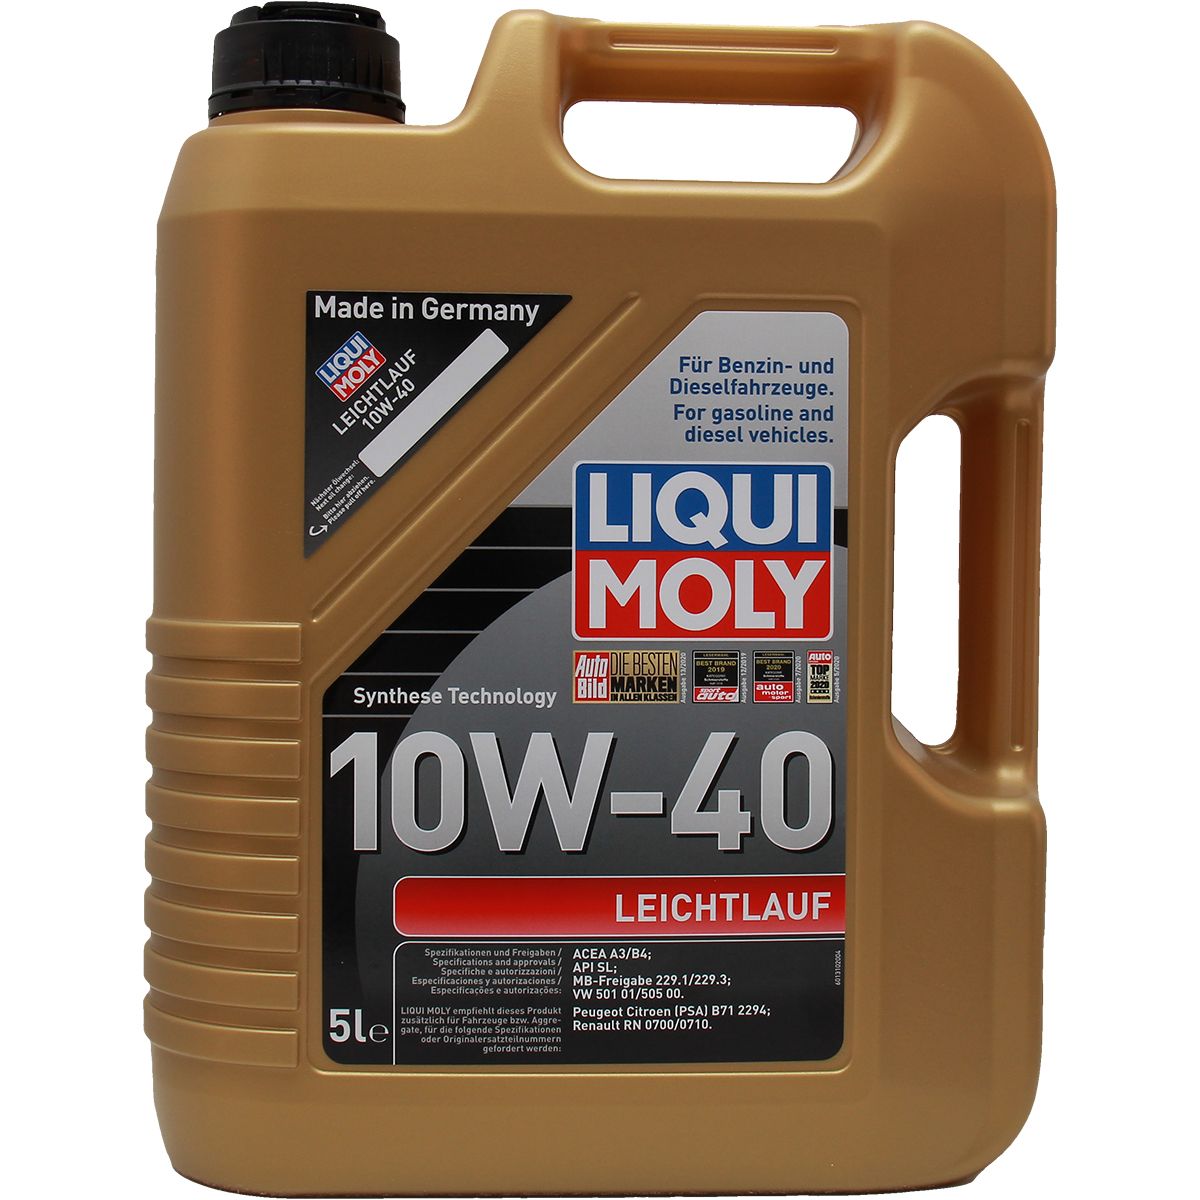 Liqui Moly Leichtlauf 10W-40 5 Liter